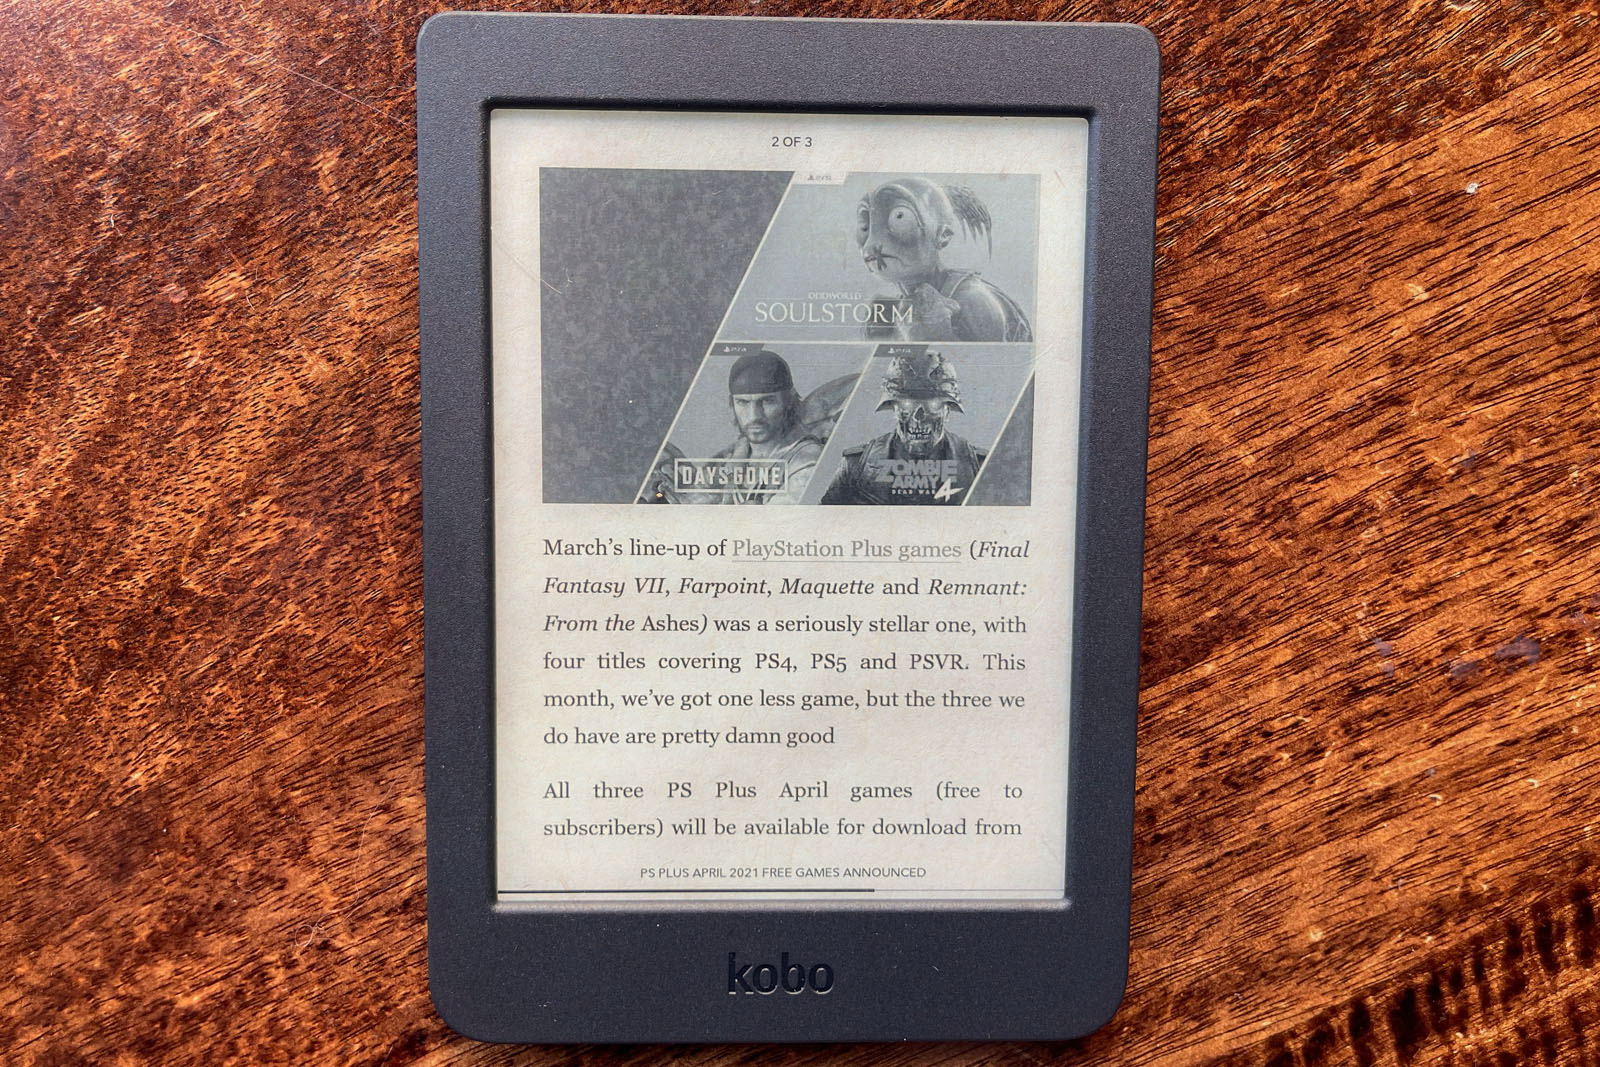 Kobo Nia review: No Kindle but Nia 'nuff